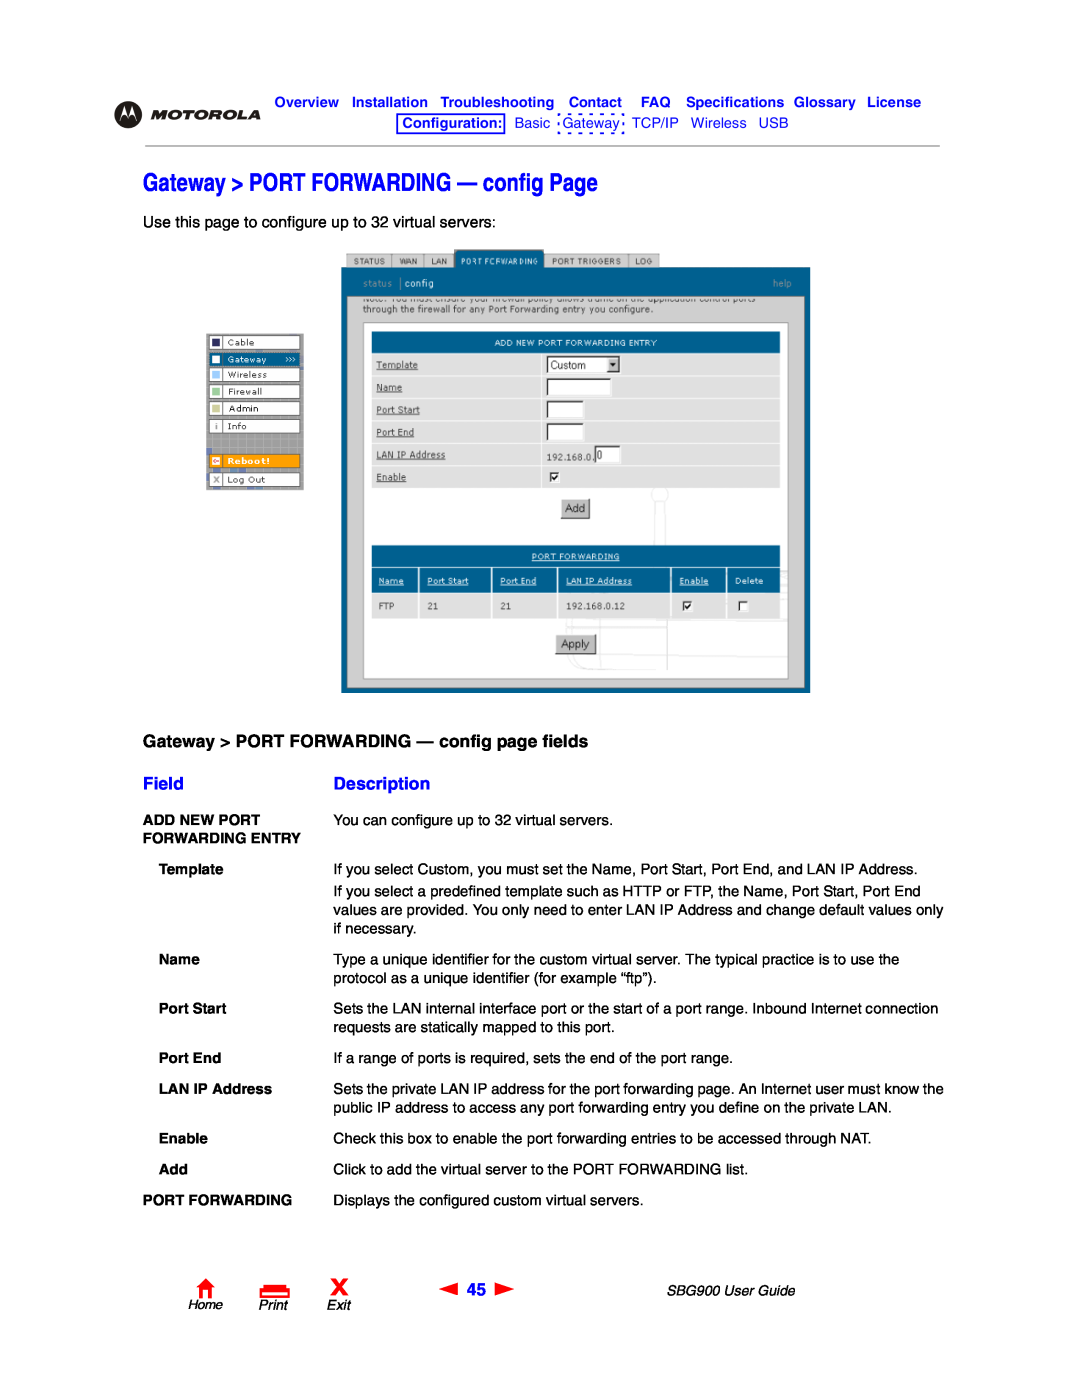 Motorola SBG900 Gateway PORT FORWARDING - config Page, Gateway PORT FORWARDING - config page fields, Field, Description 